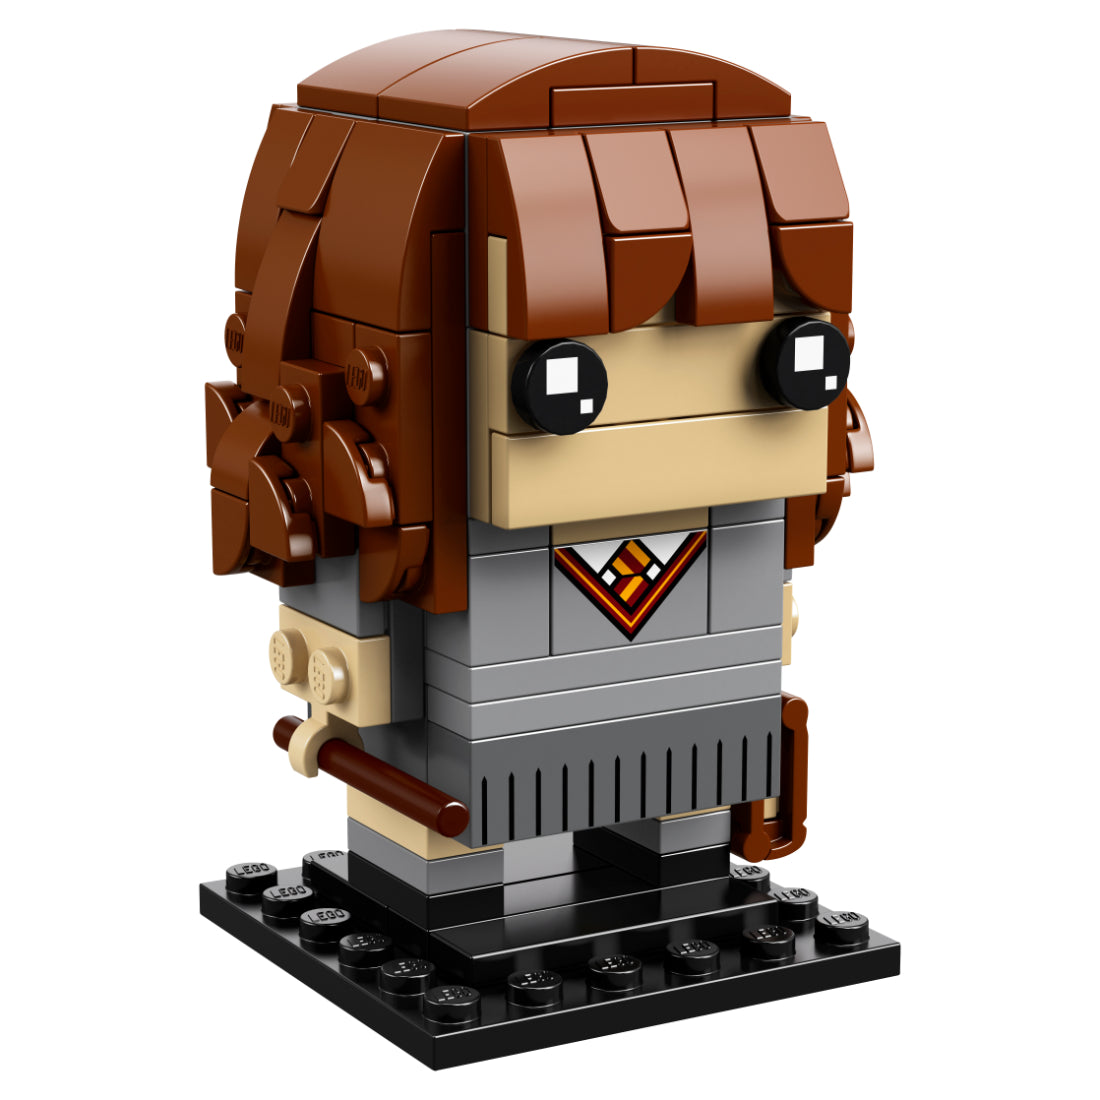 LEGO BrickHeadz Hermione Granger (41616)